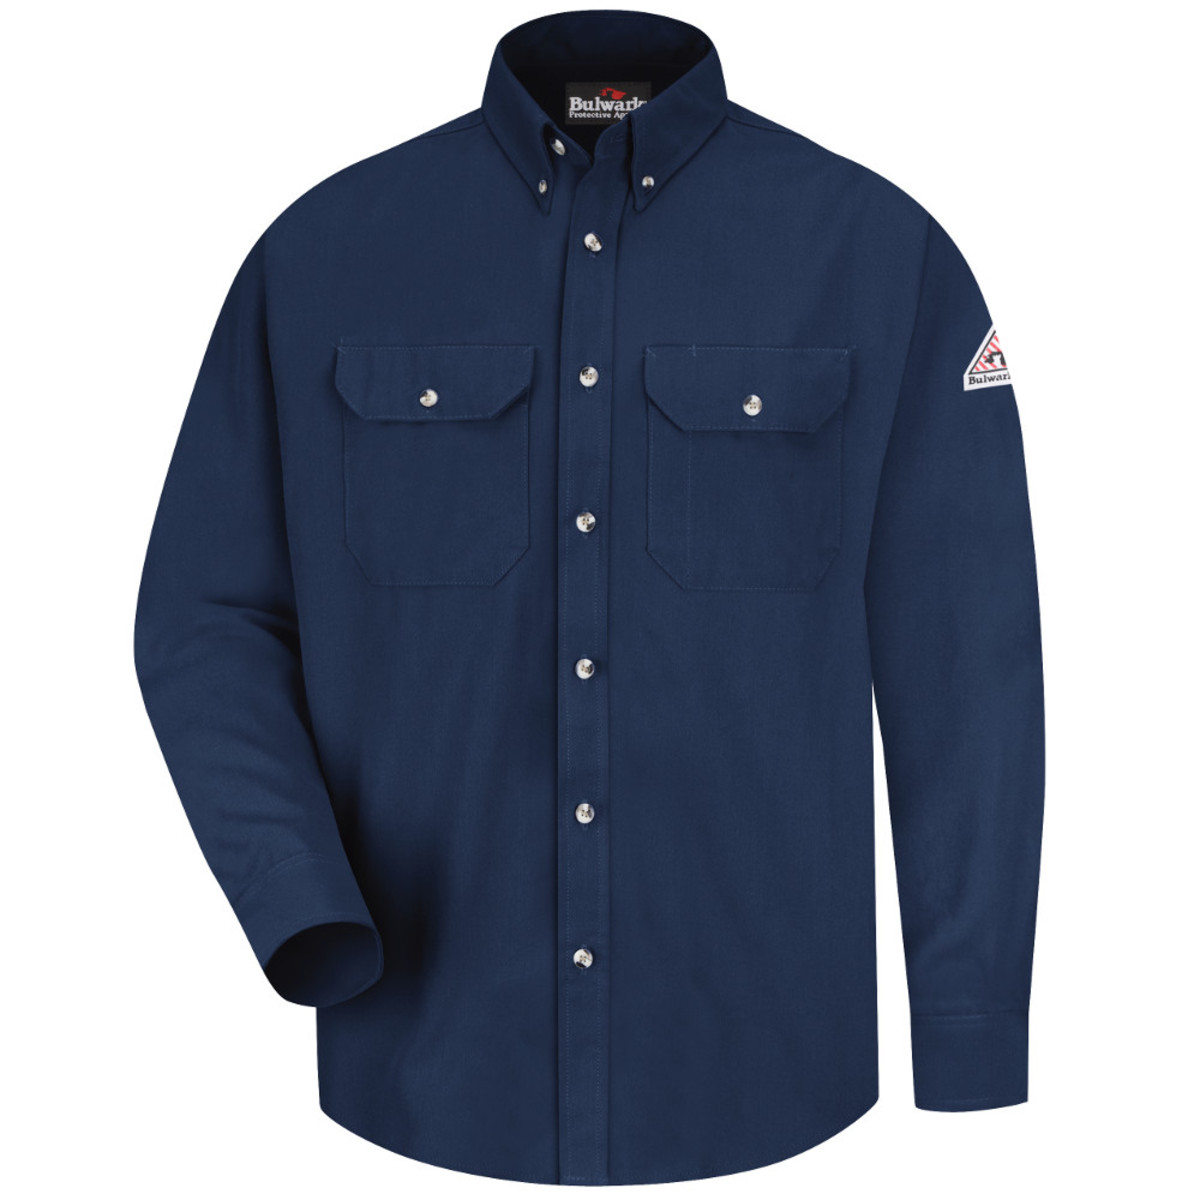 Bulwark® X-Large X-Tall Navy Blue Modacrylic/Lyocell/Aramid Flame Resistant Dress Uniform Shirt With Button Front Closure